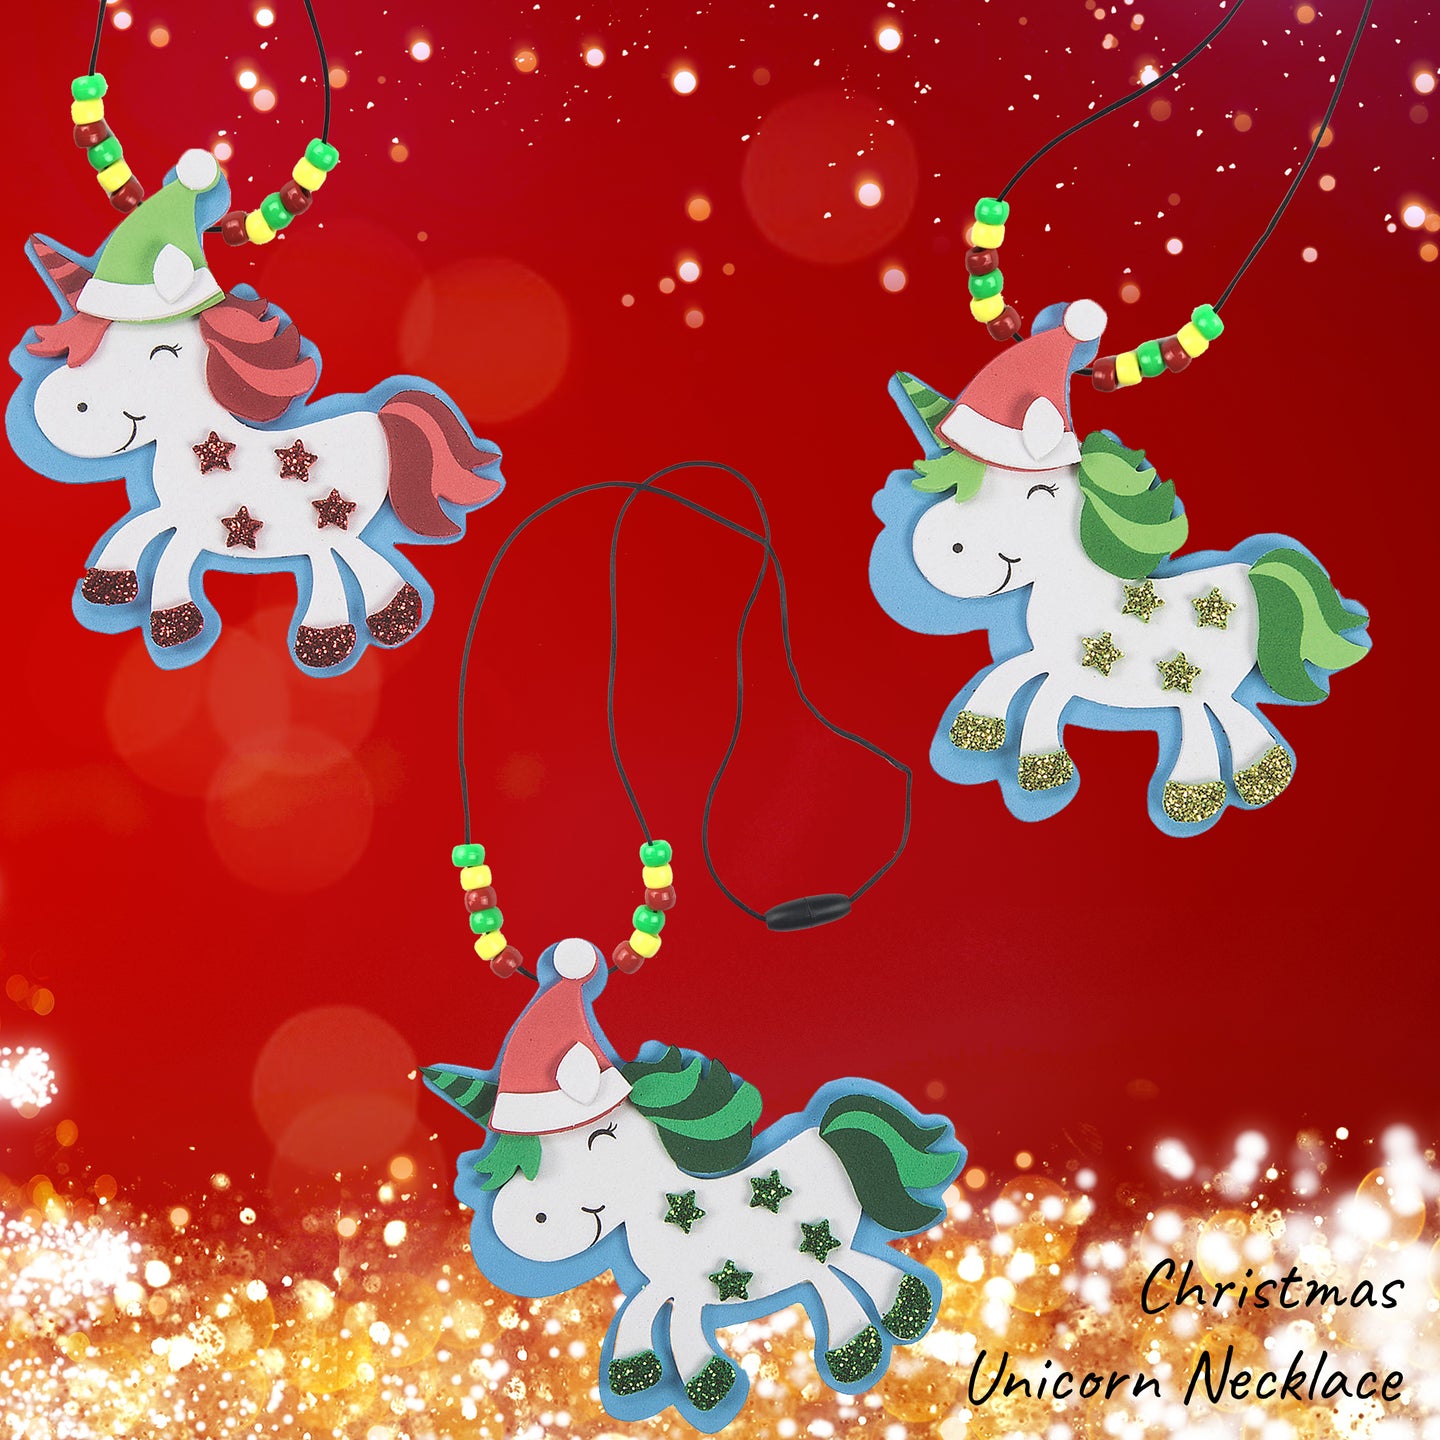 Christmas Unicorn Necklace DIY Craft Kit (Pack of 1, 2 or 12 kits)